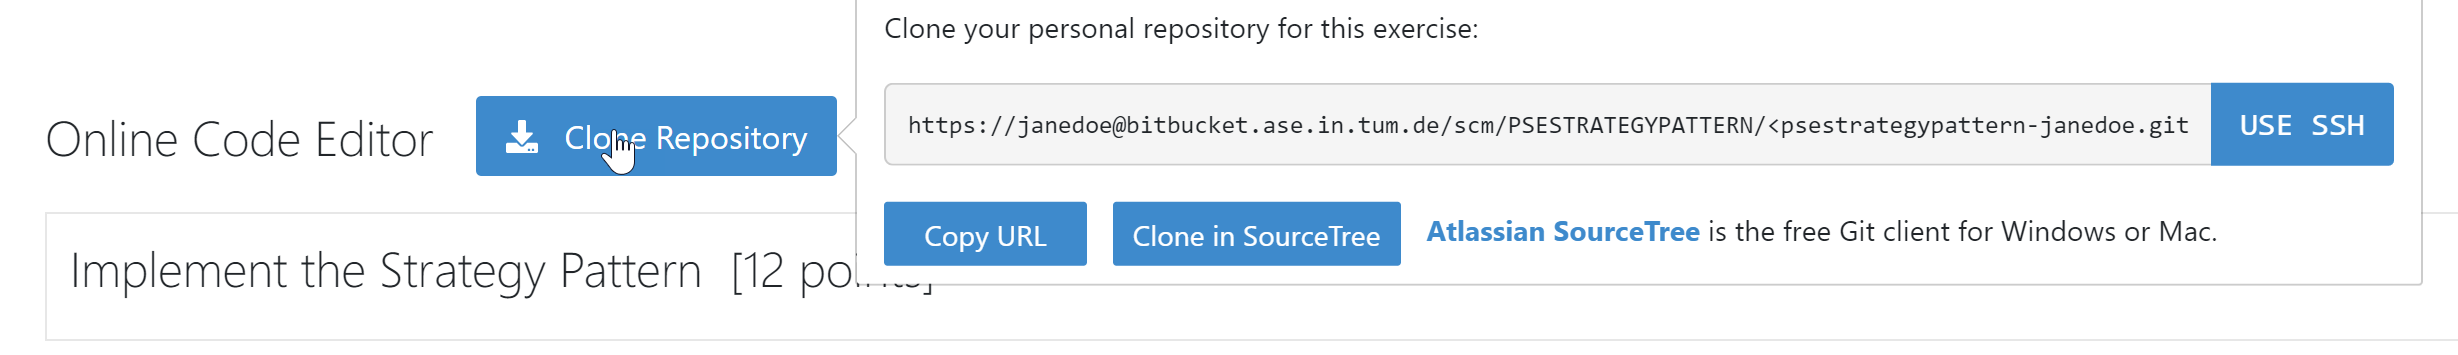 clone_repository.png